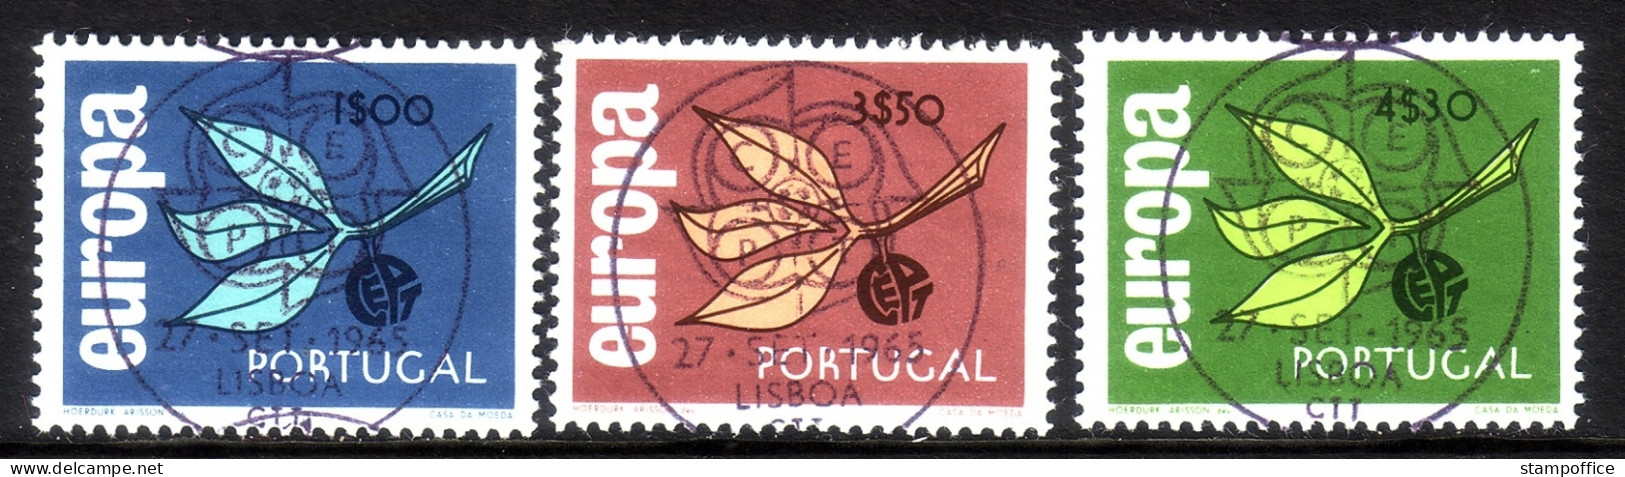 PORTUGAL MI-NR. 990-992 O (VOLLSTEMPEL) EUROPA 1965 ZWEIG - Used Stamps